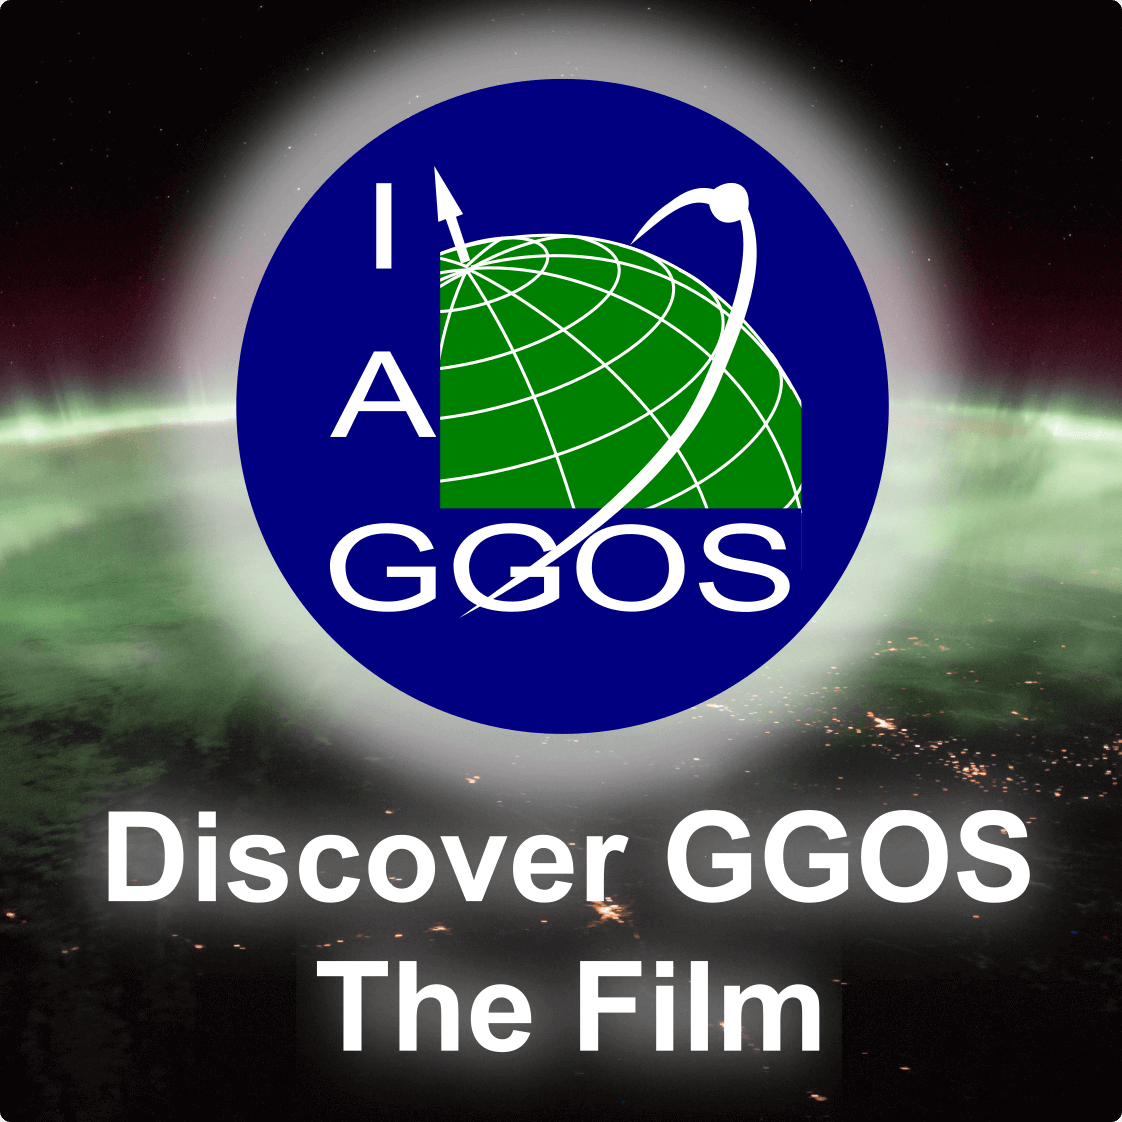 GGOS Film - Italian Version